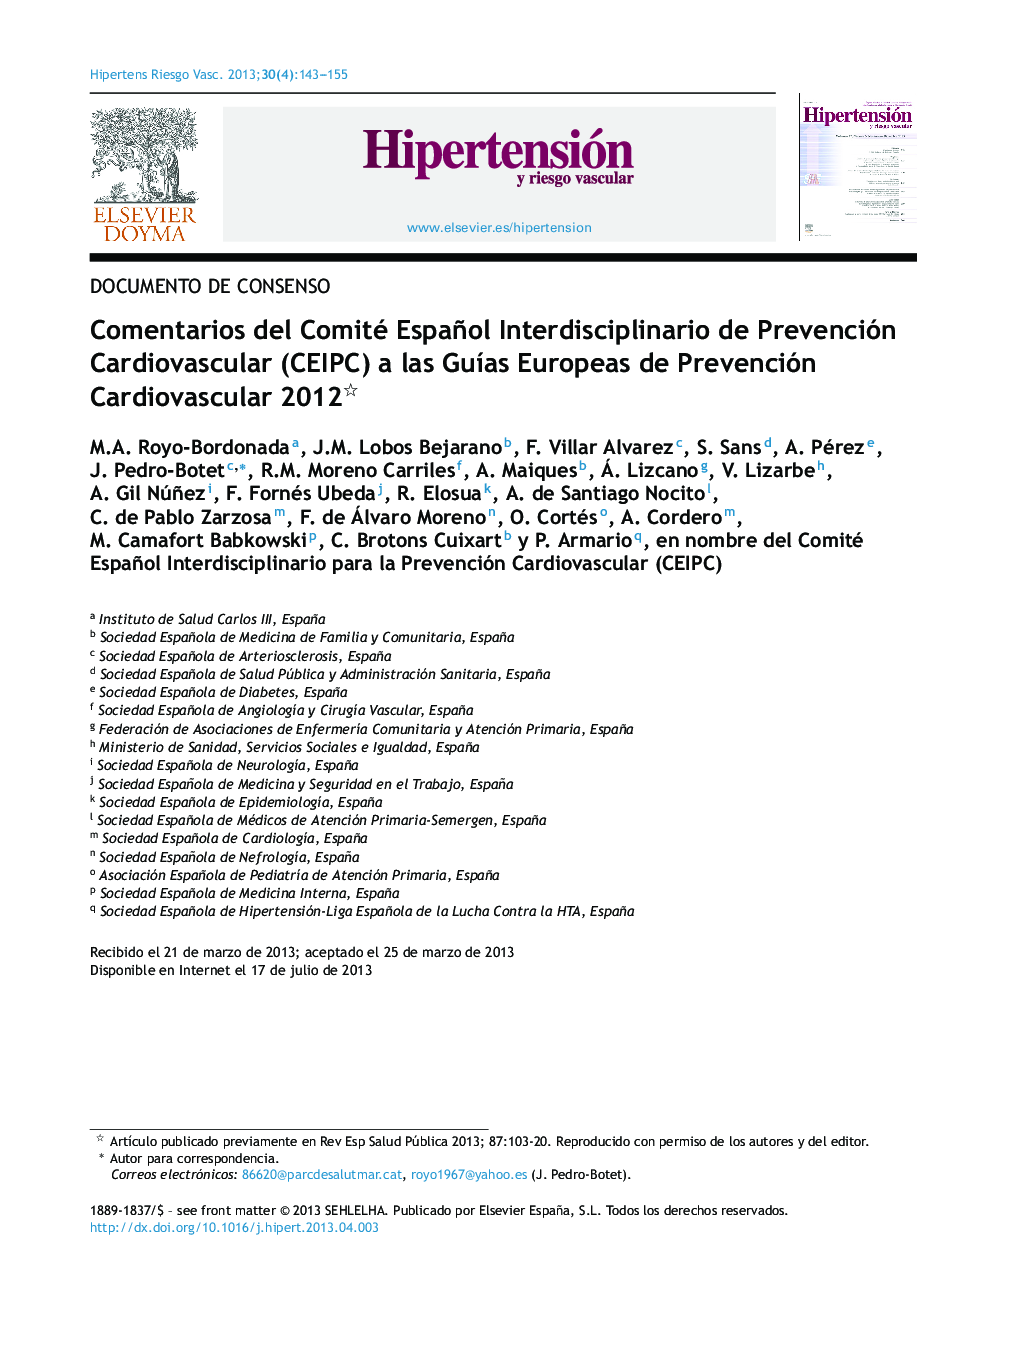 Comentarios del Comité Español Interdisciplinario de Prevención Cardiovascular (CEIPC) a las Guías Europeas de Prevención Cardiovascular 2012 